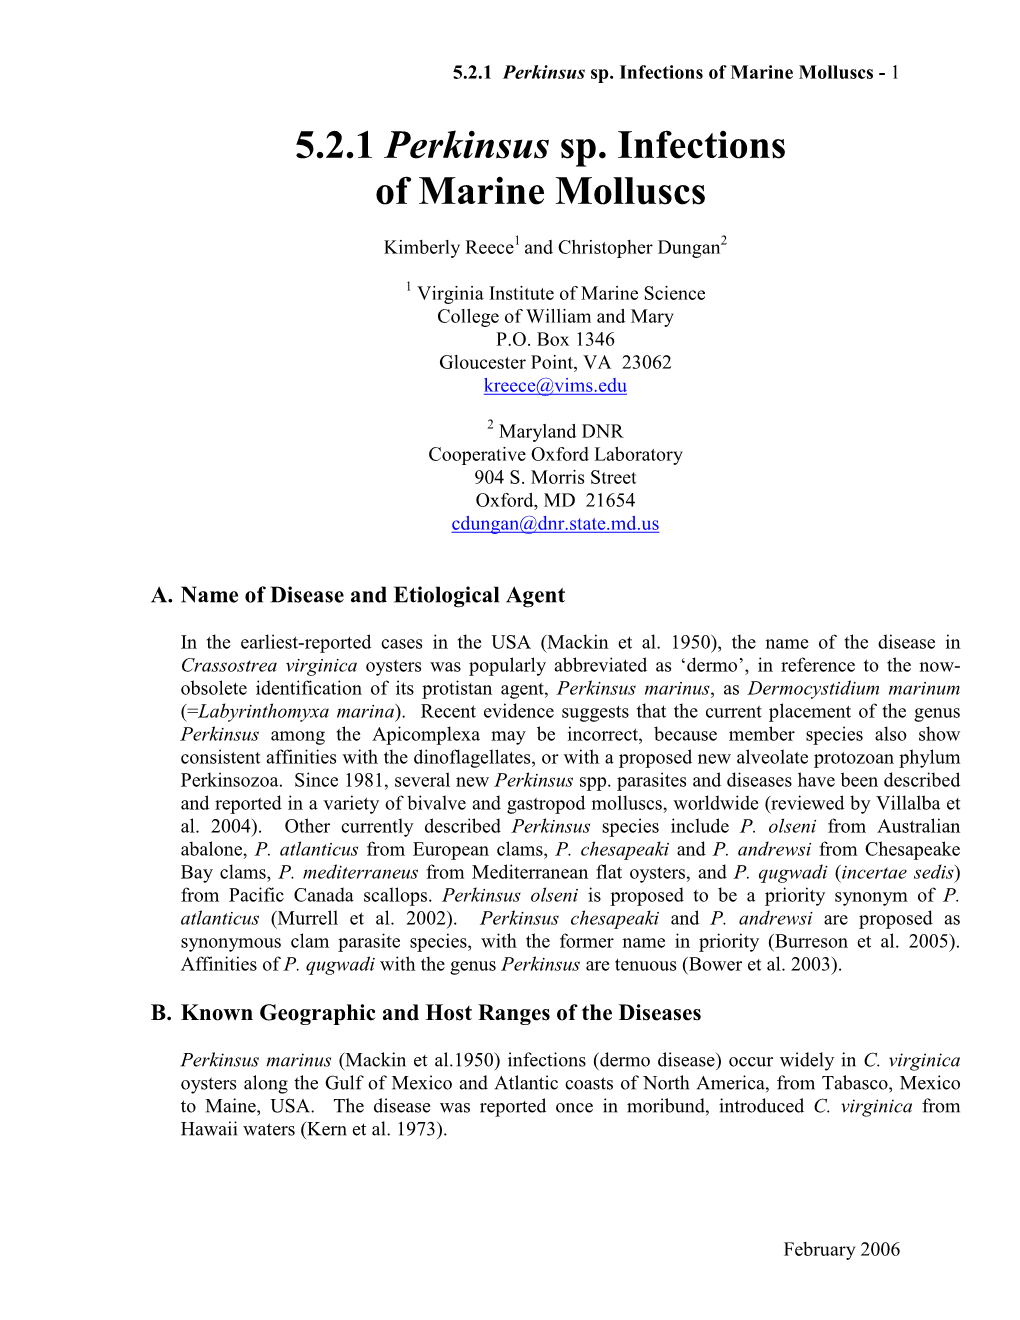 5.2.1 Perkinsus Sp. Infections of Marine Molluscs - 1